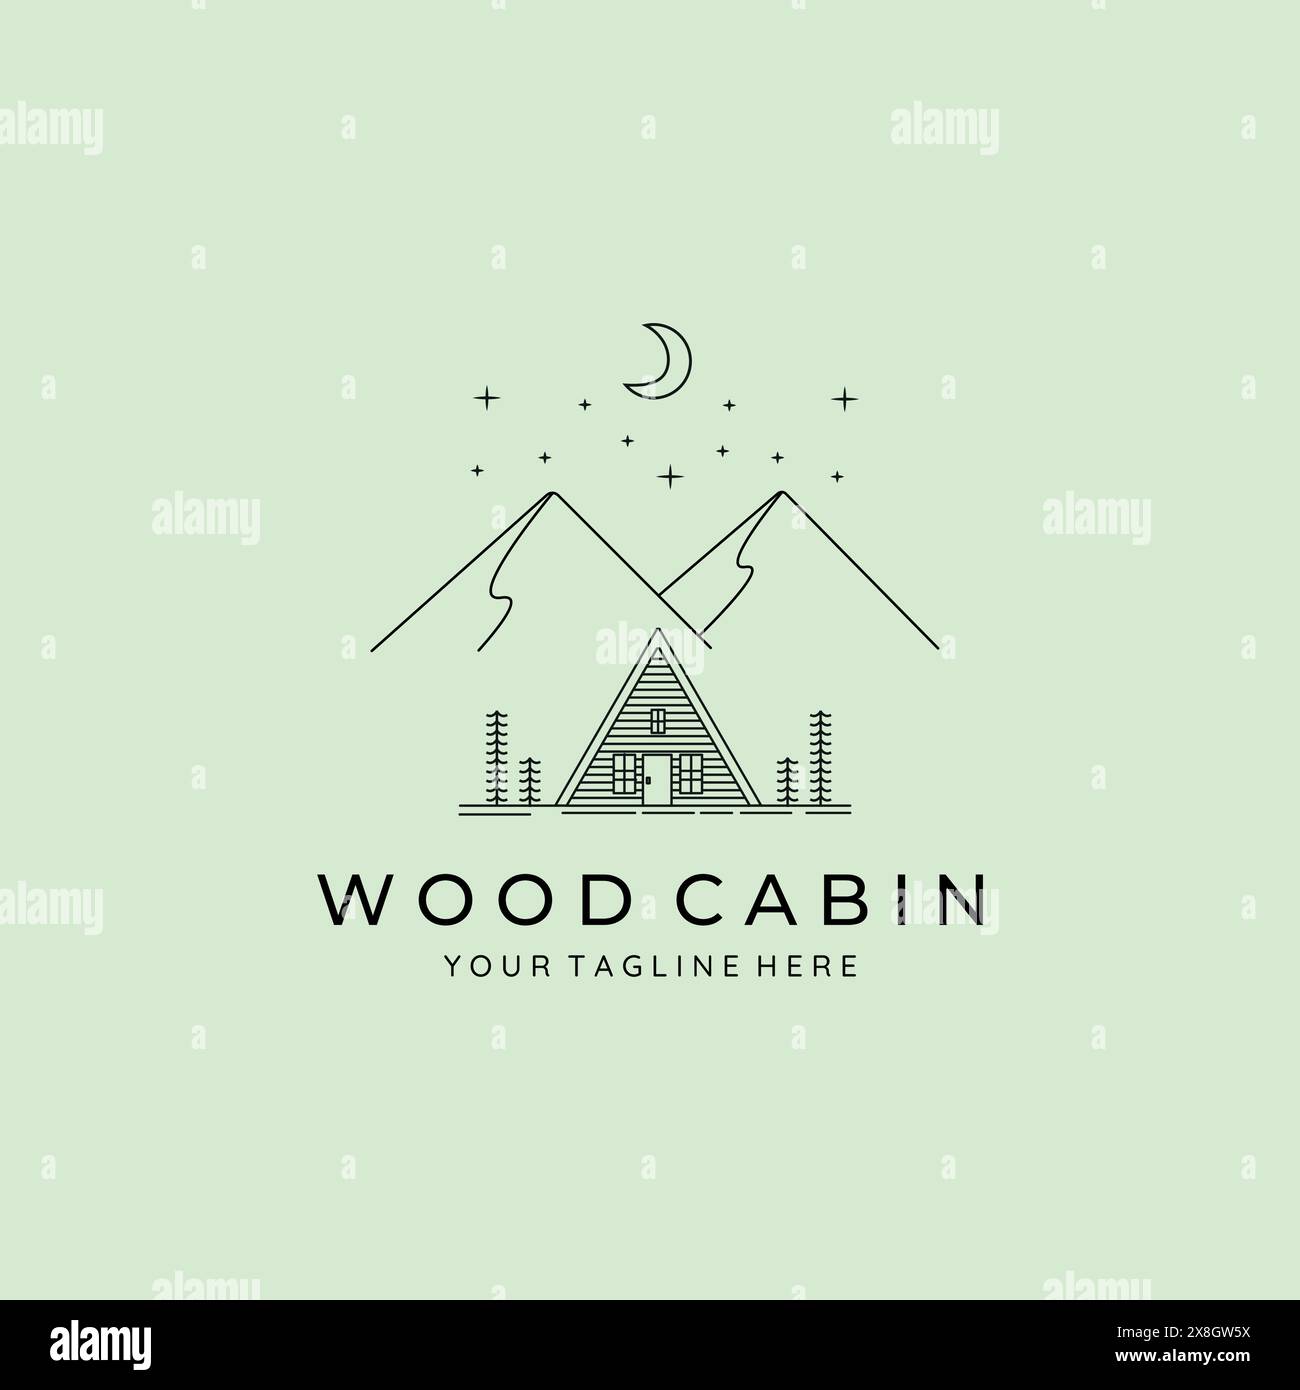 Cabin logo vector illustration design Stock Vector